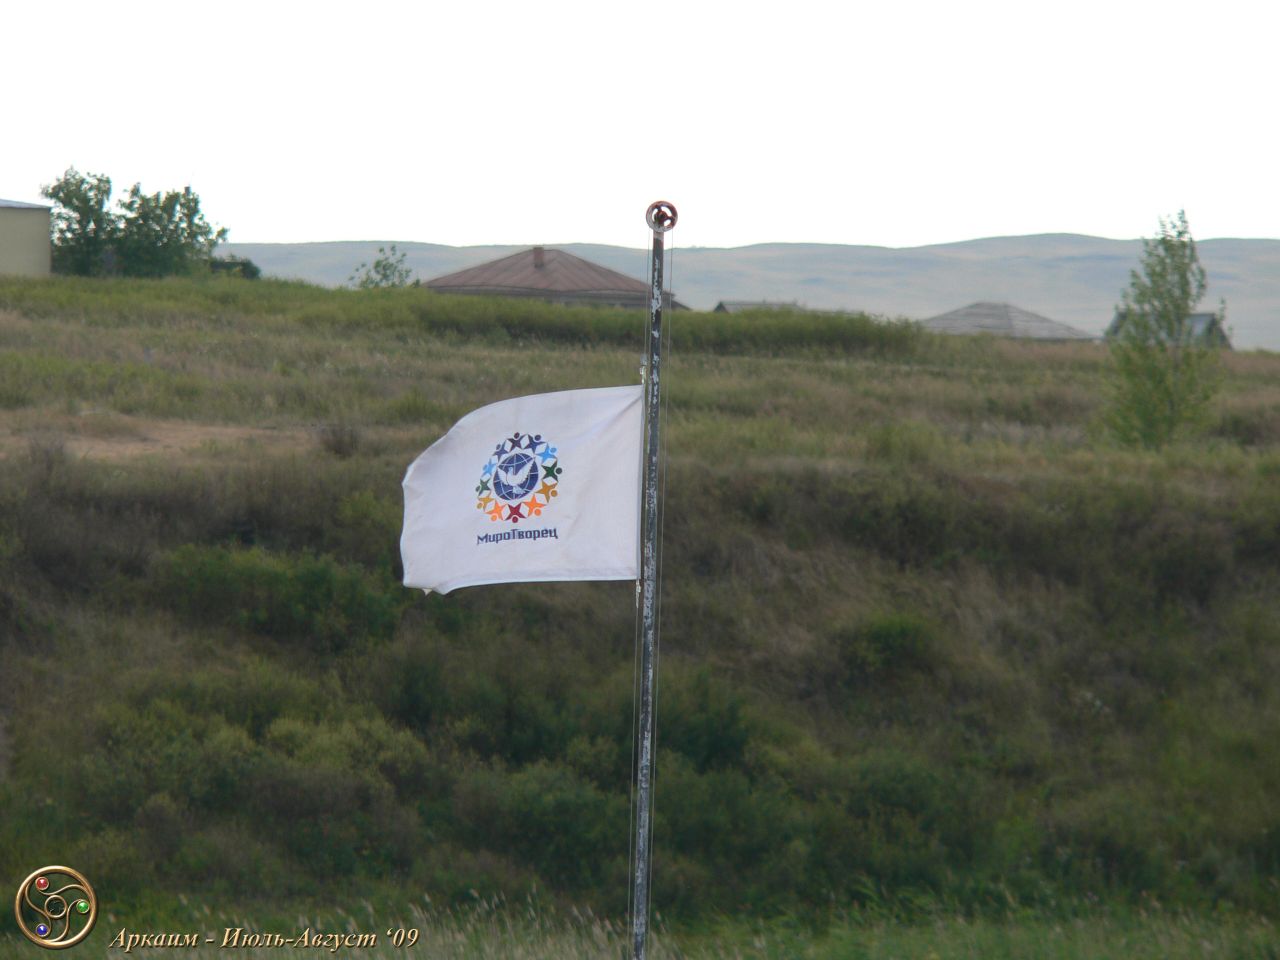 Над Аркаимом флаг МироТворцев - Фоторепортаж поездки: Аркаим. Июль-Август 2009г.